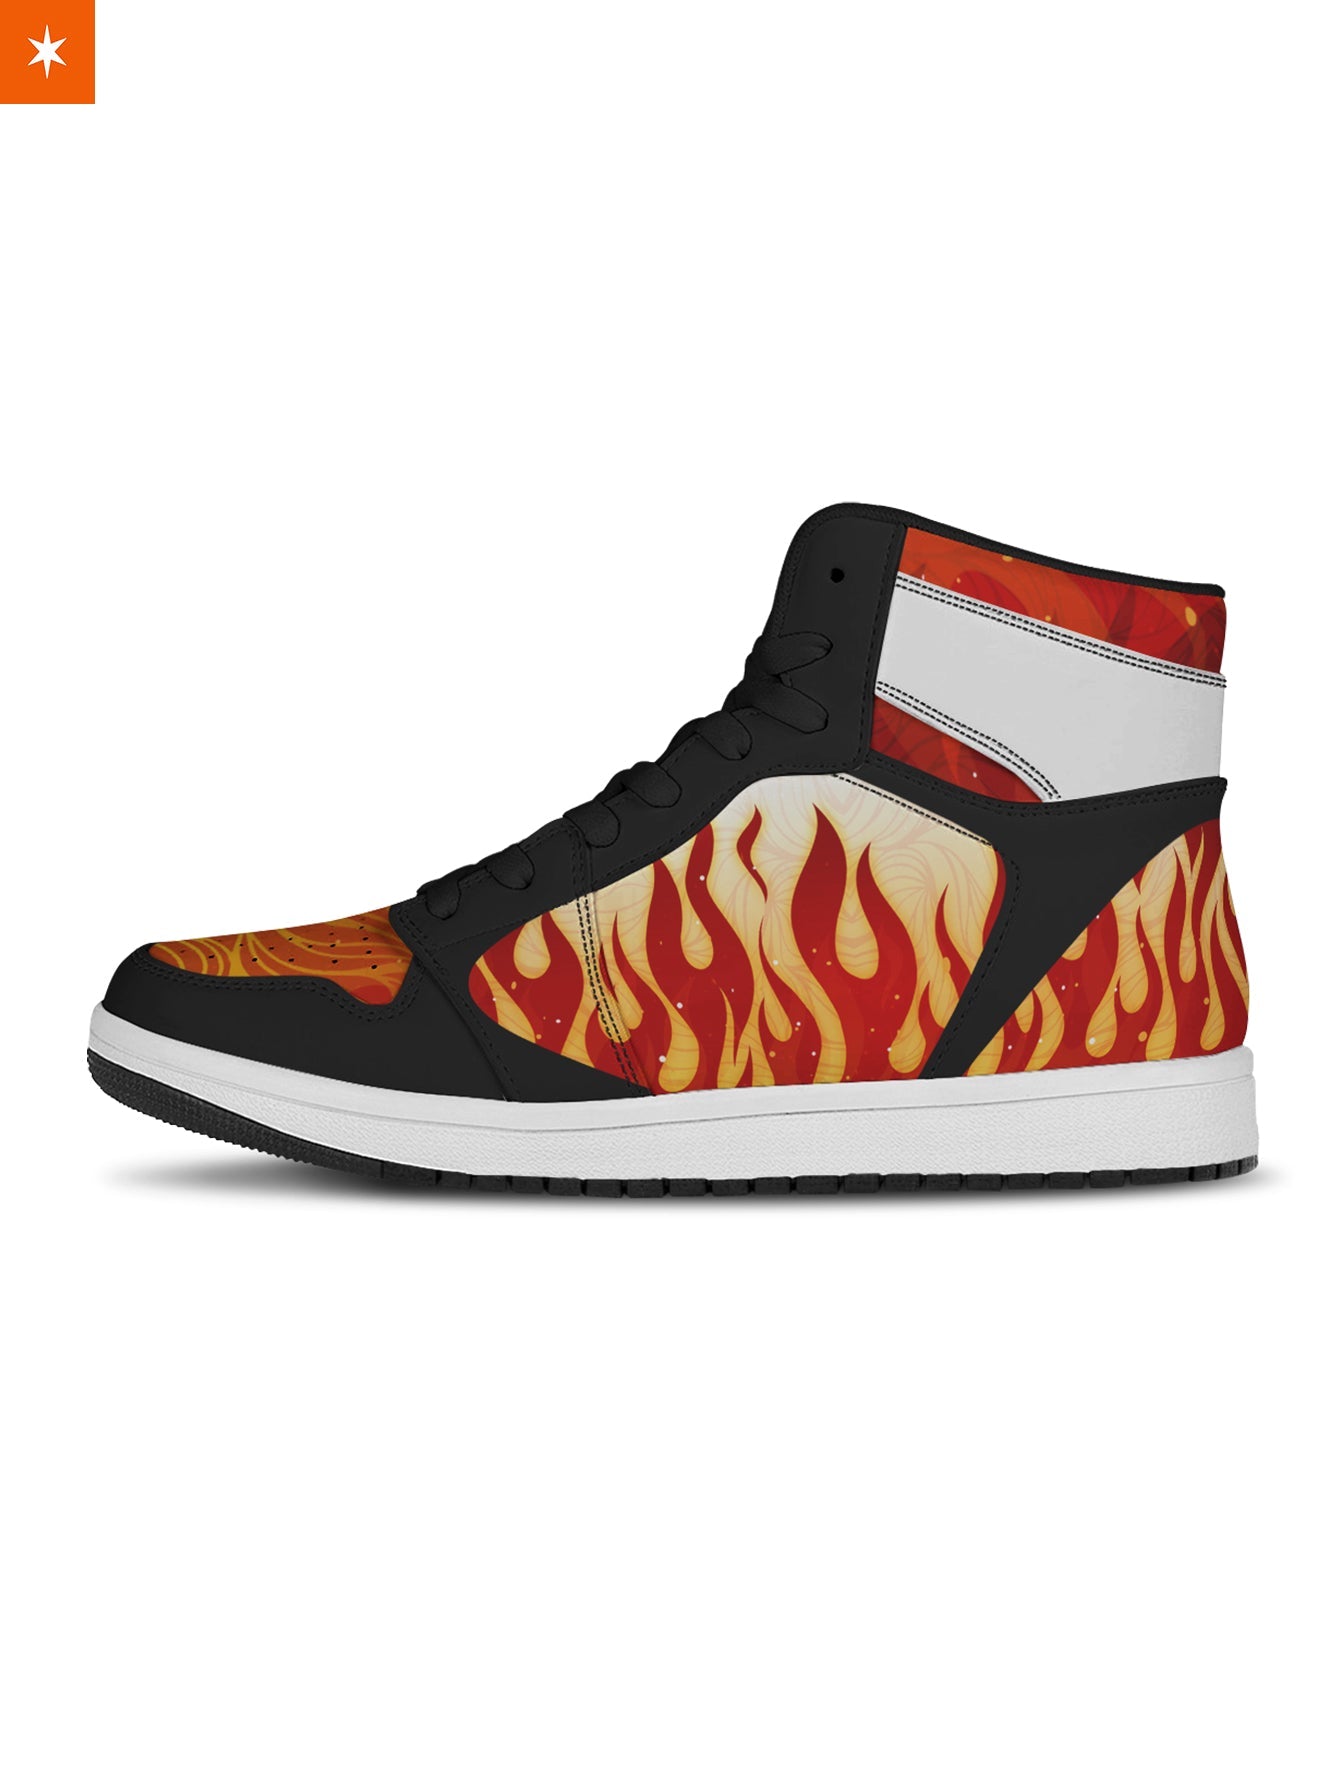 Fandomaniax - Rengoku Fire Skill JD Sneakers